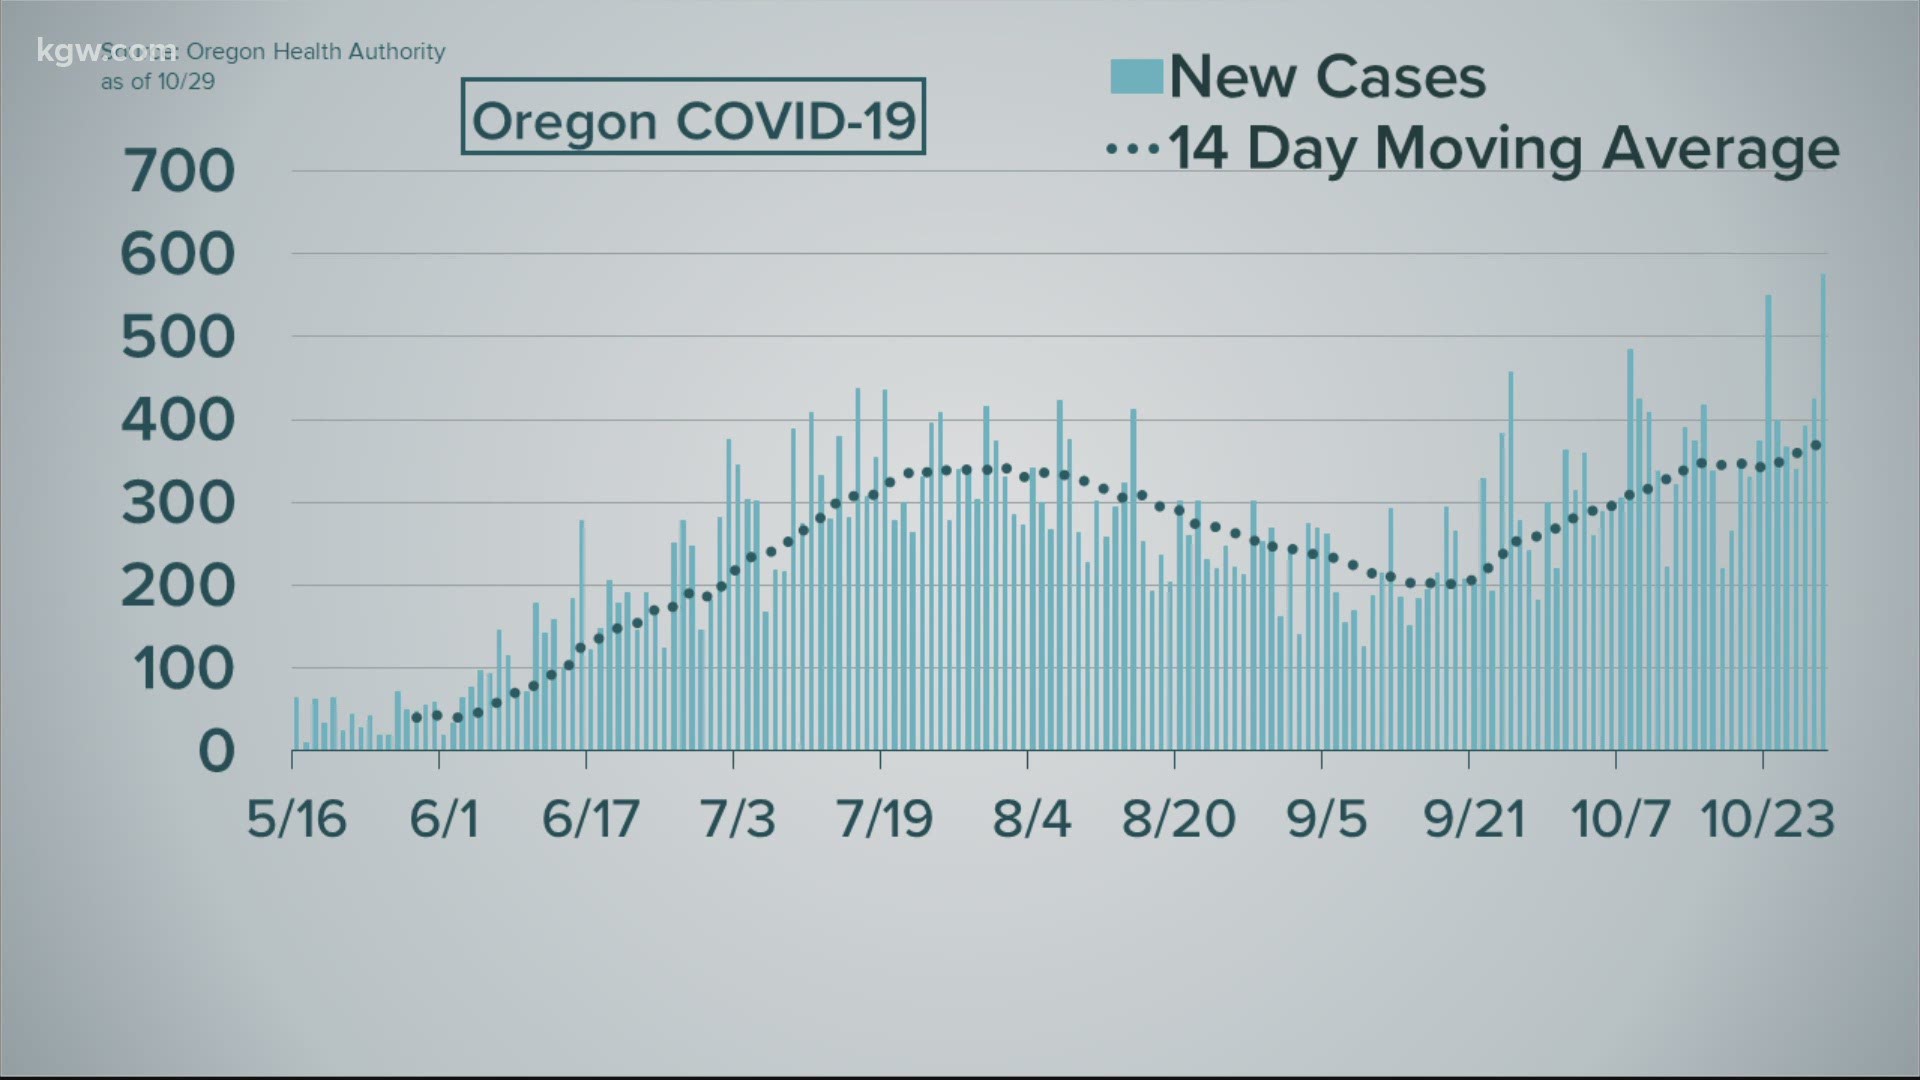 Oregon announced a record 575 new coronavirus cases on Thursday, Oct. 29.